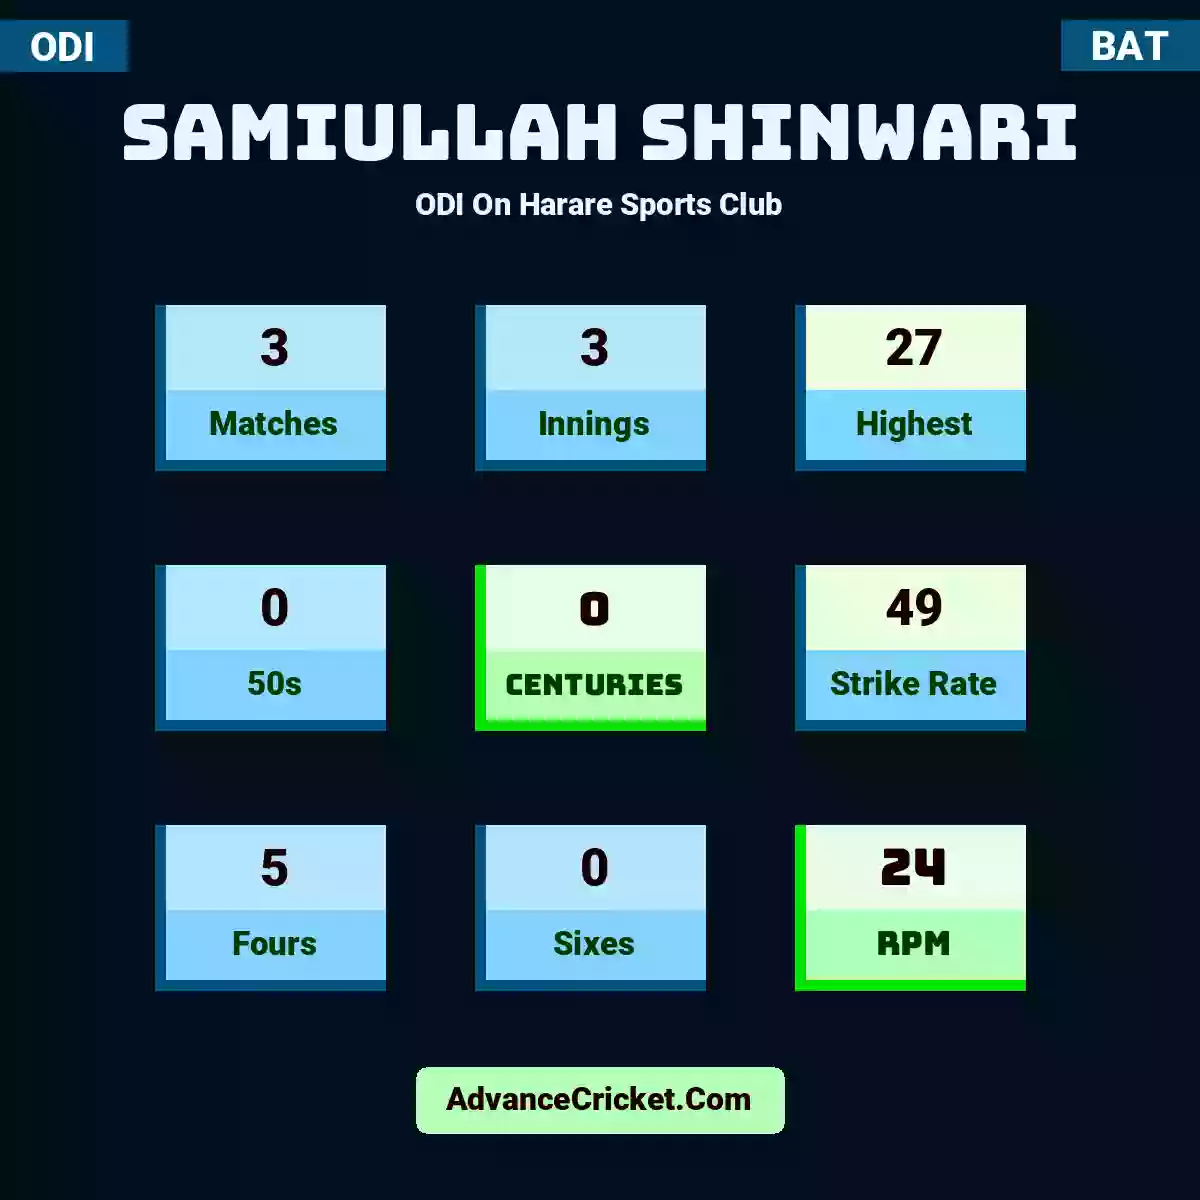 Samiullah Shinwari ODI  On Harare Sports Club, Samiullah Shinwari played 3 matches, scored 27 runs as highest, 0 half-centuries, and 0 centuries, with a strike rate of 49. S.Shinwari hit 5 fours and 0 sixes, with an RPM of 24.